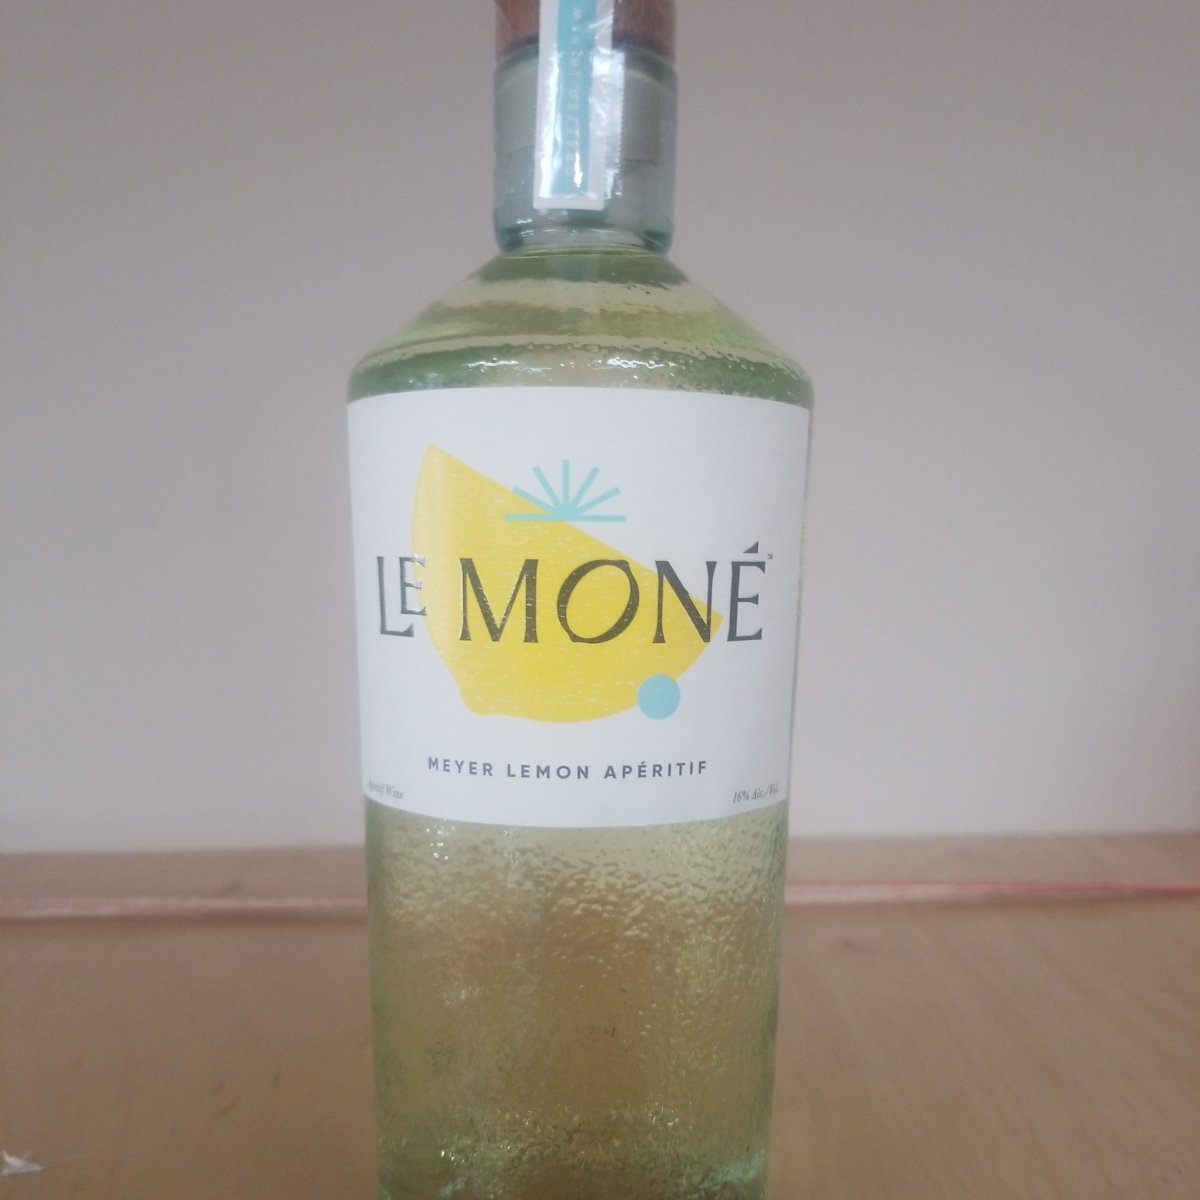 Le Mone Meyer Lemon Aperitif 750ml - Sip &amp; Say